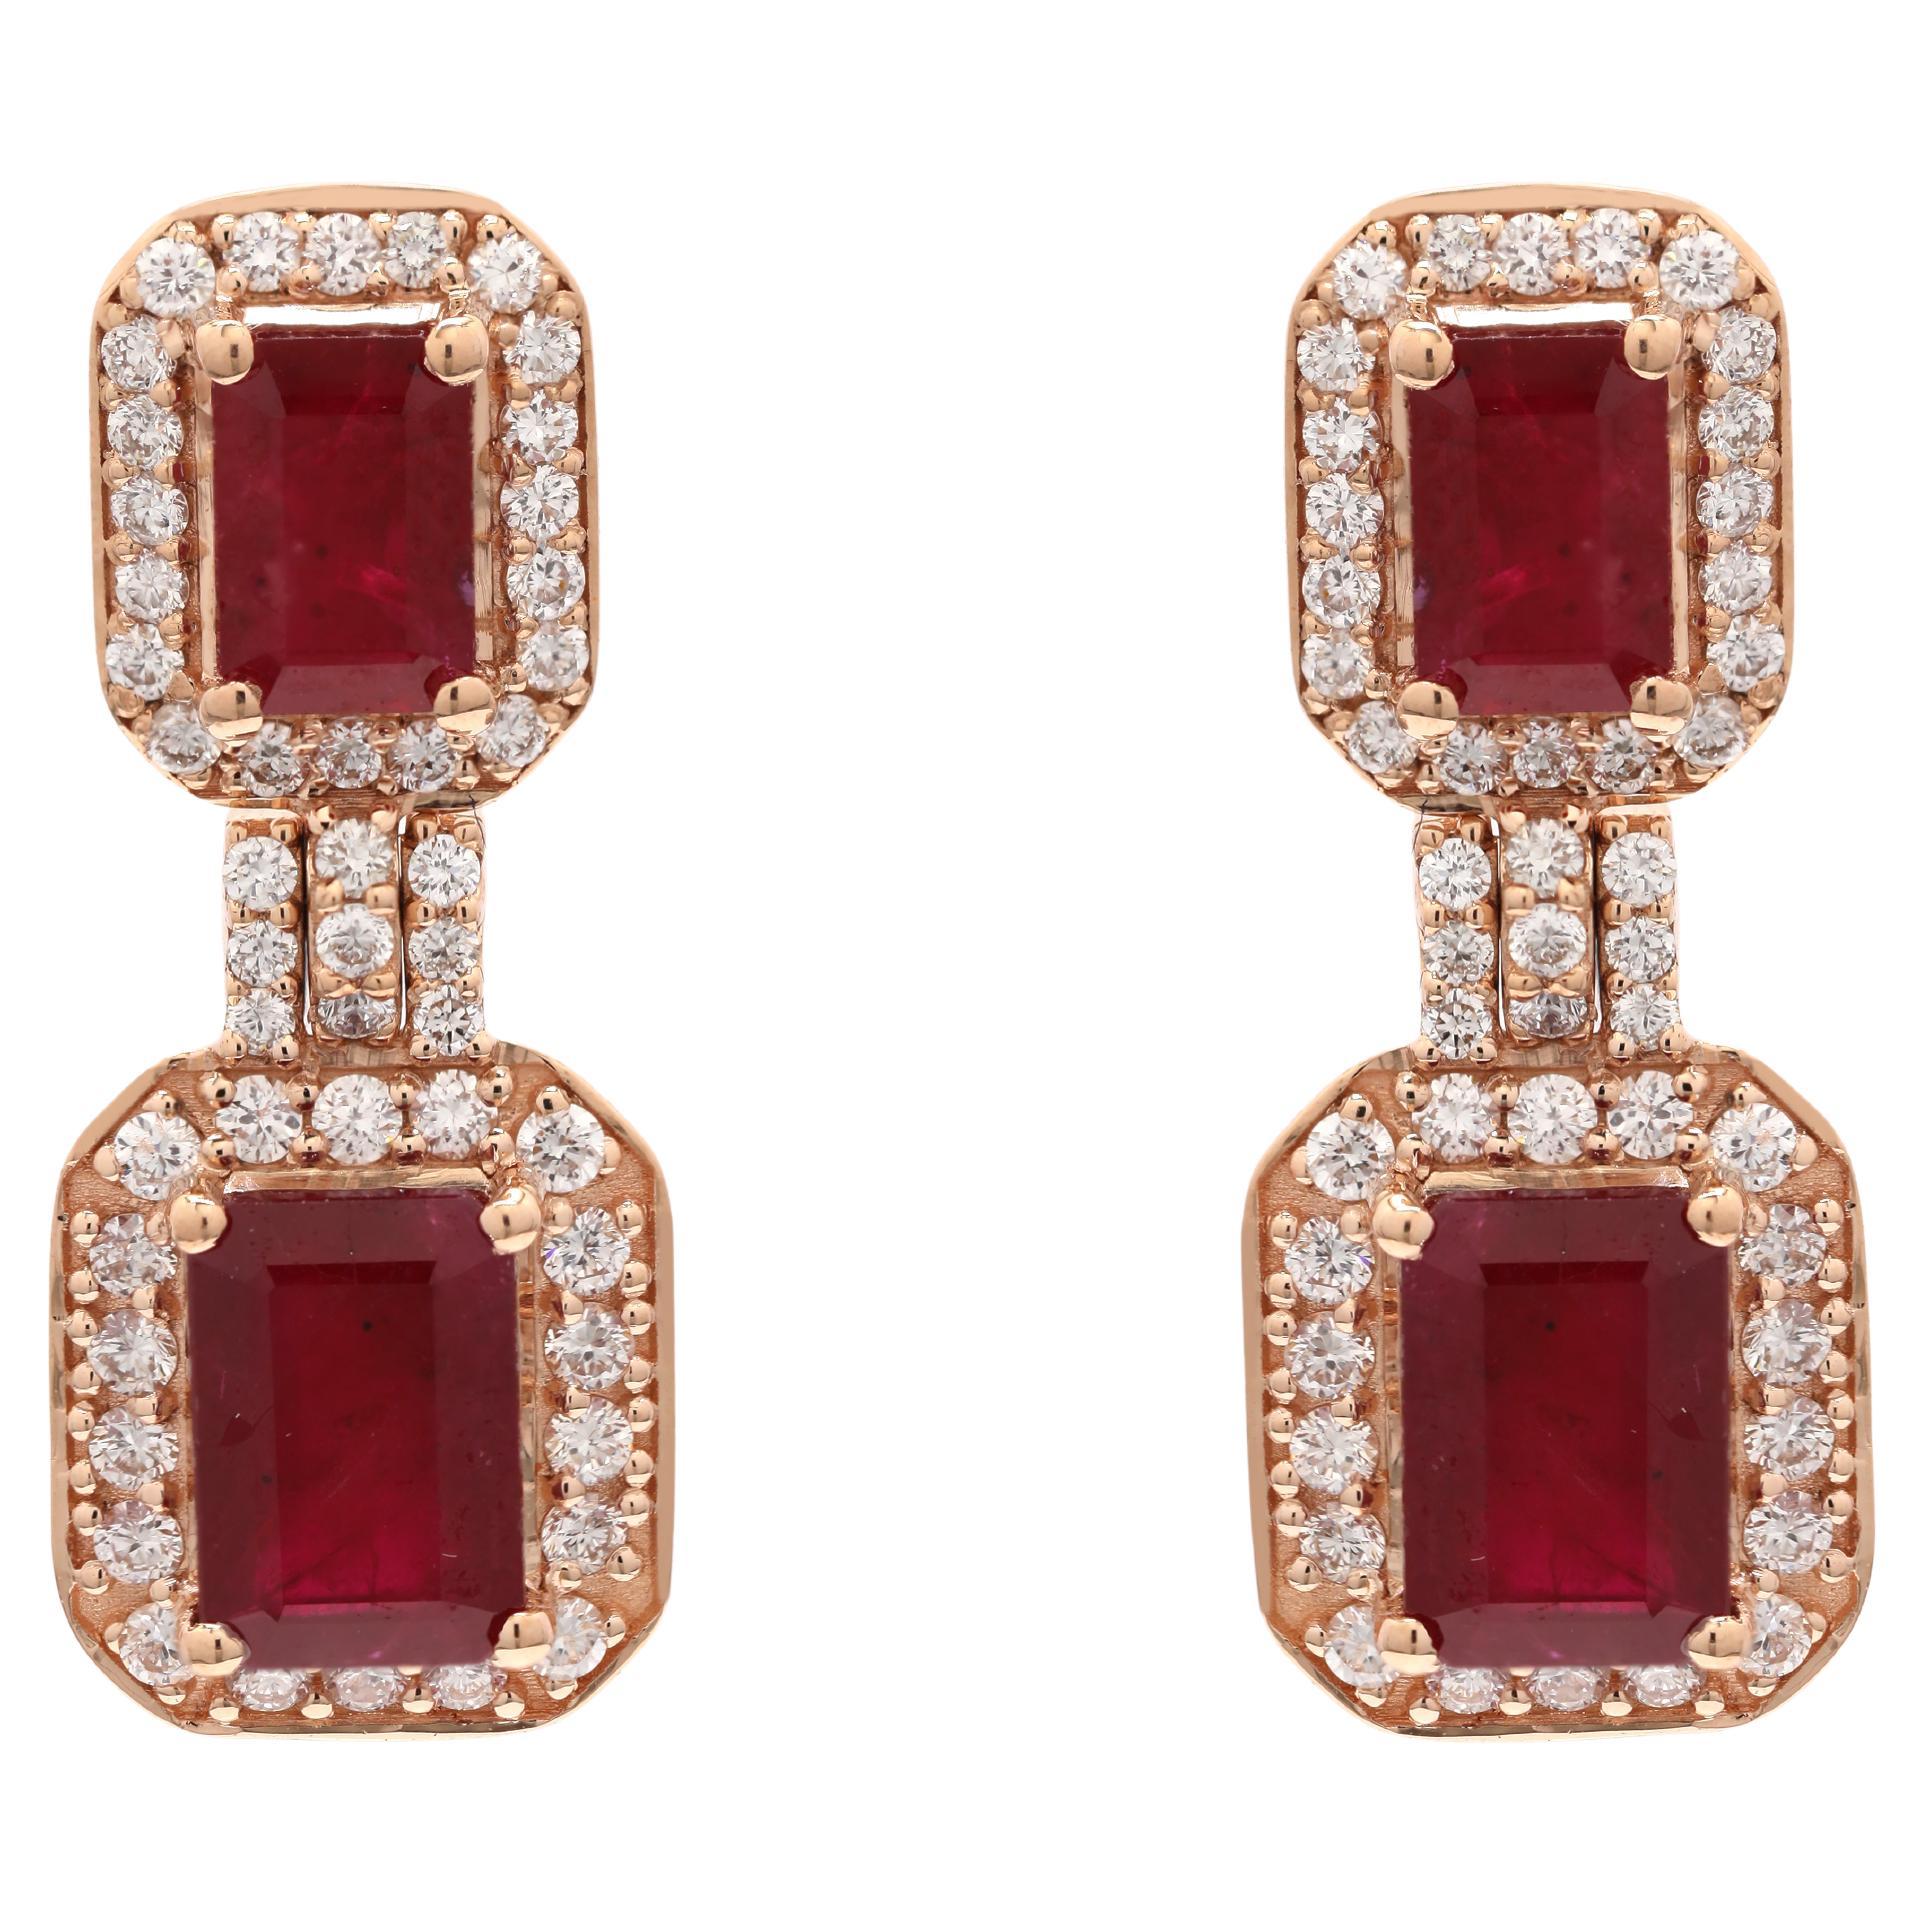 3.33 Carat Octagon Cut Ruby Dangle Earrings in 14K Rose Gold with Diamonds 